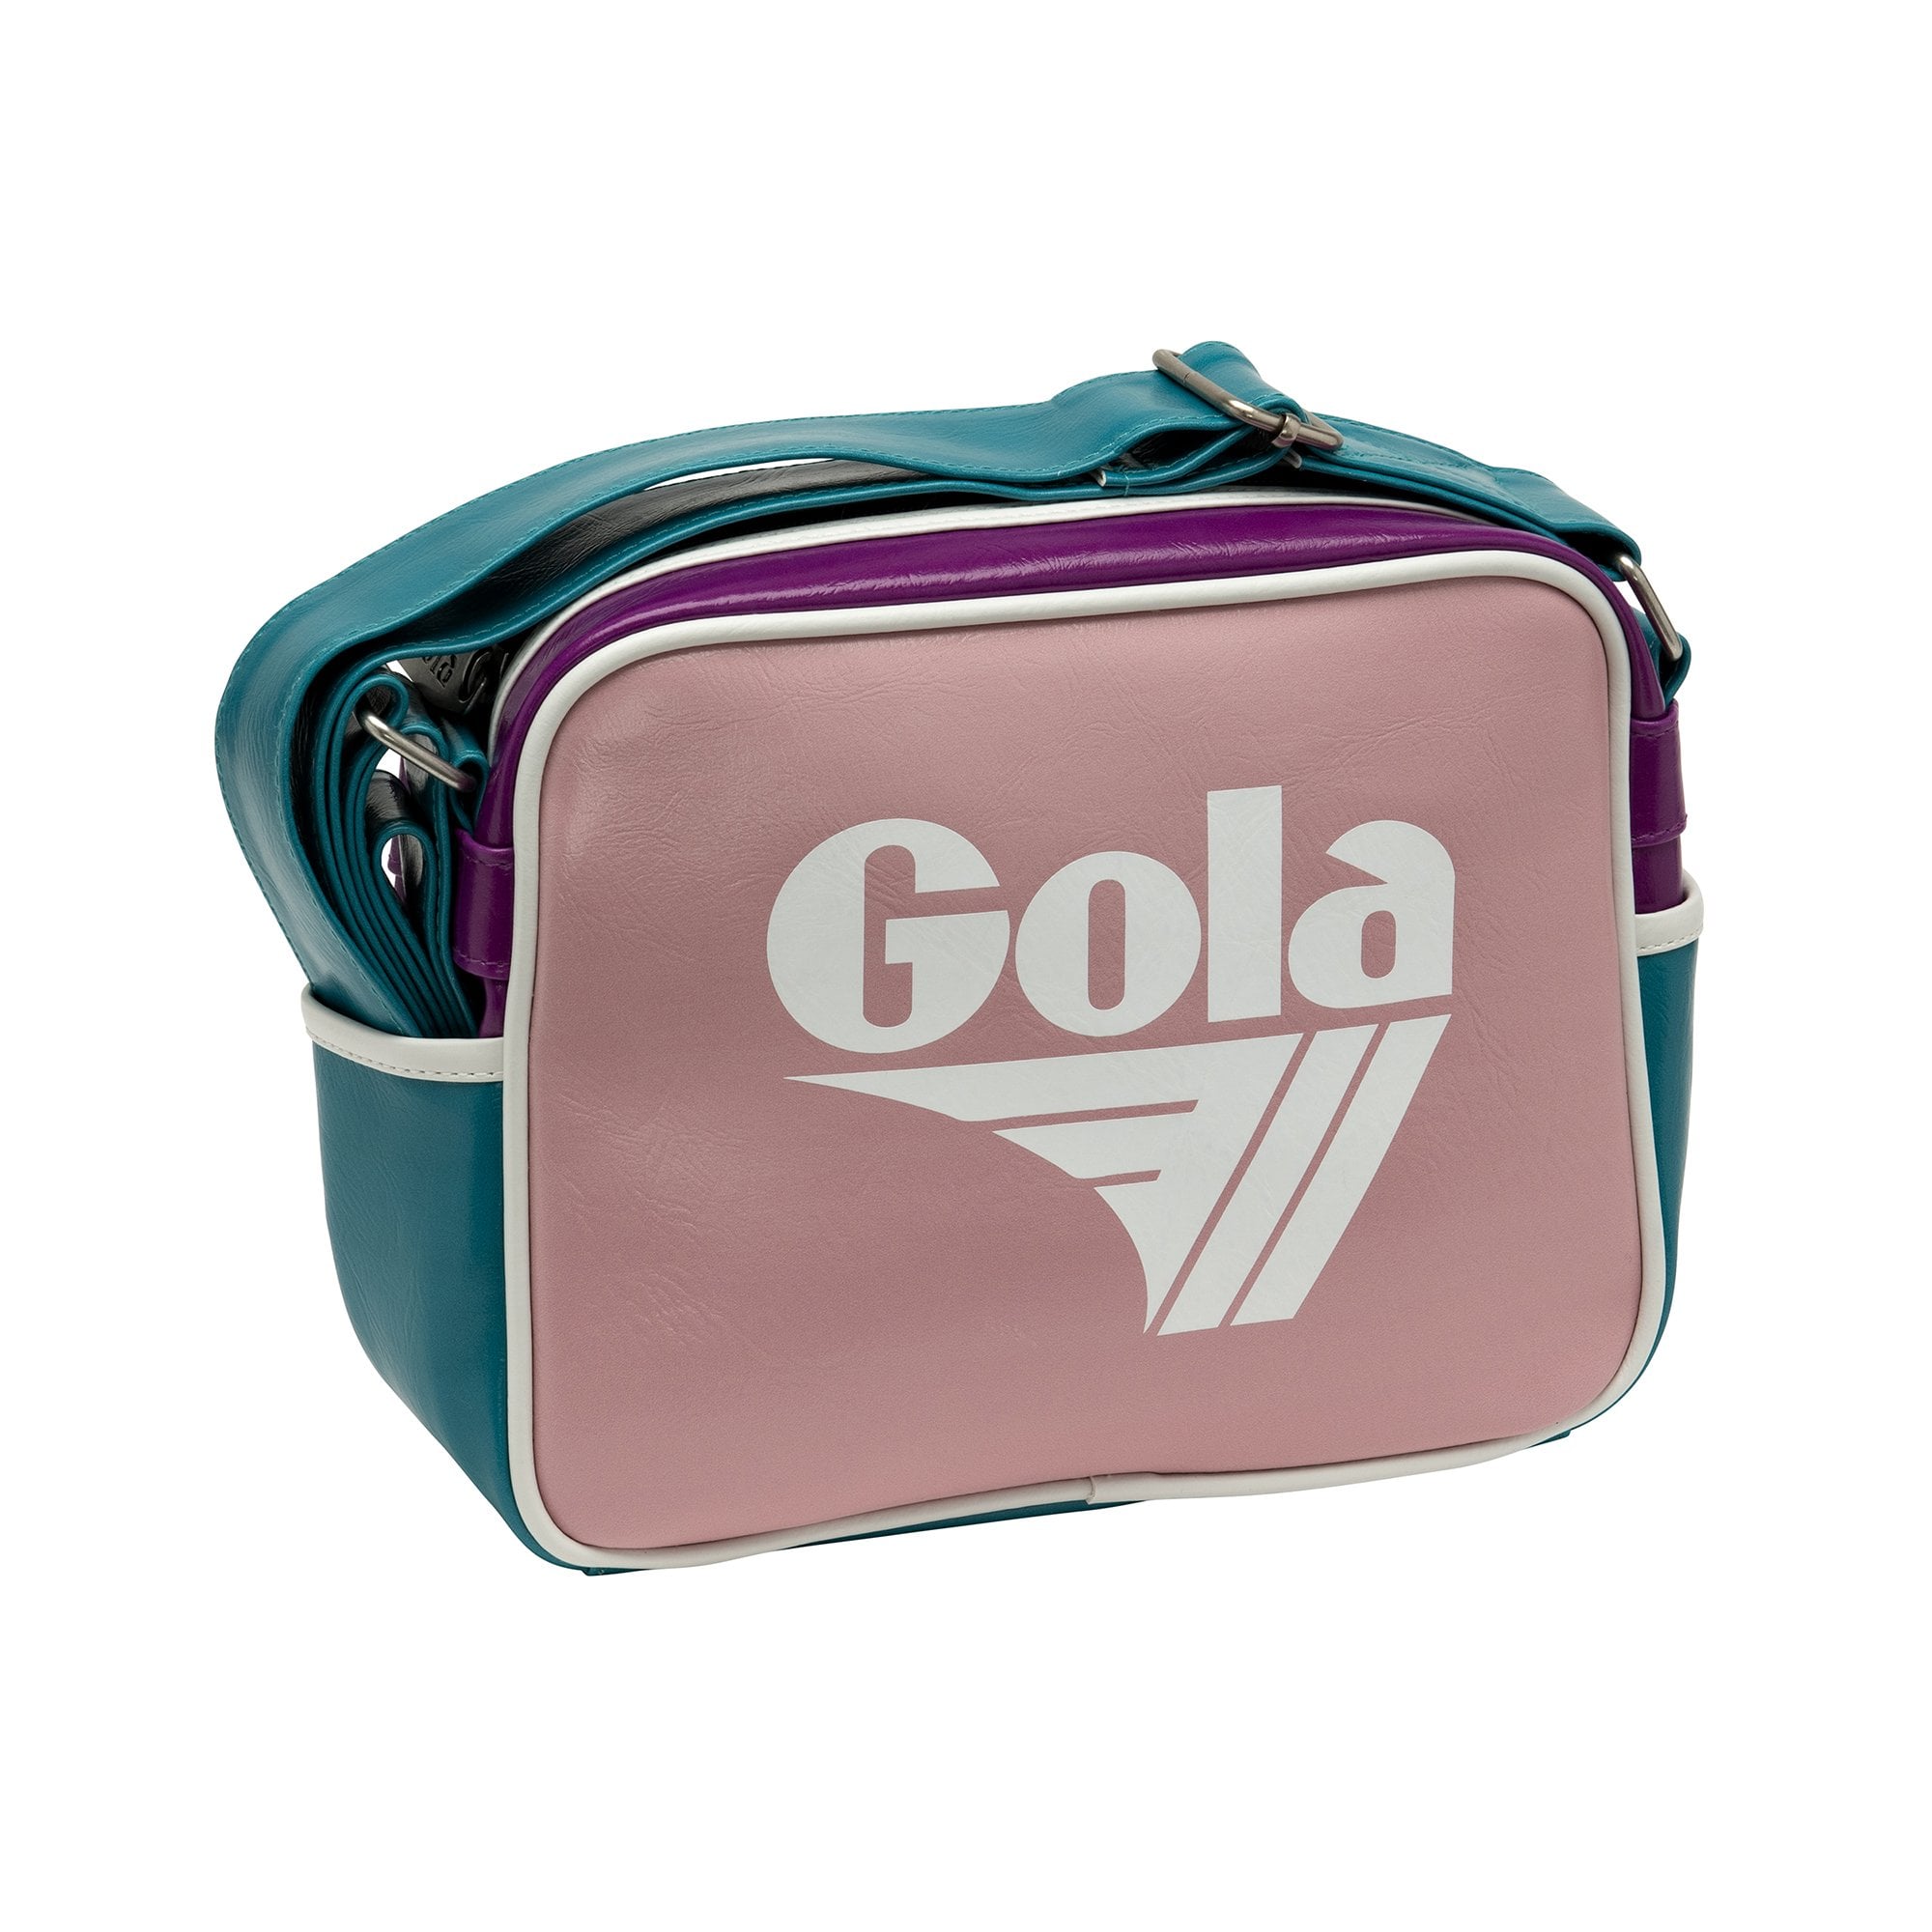 Gola Micro Redford Bag